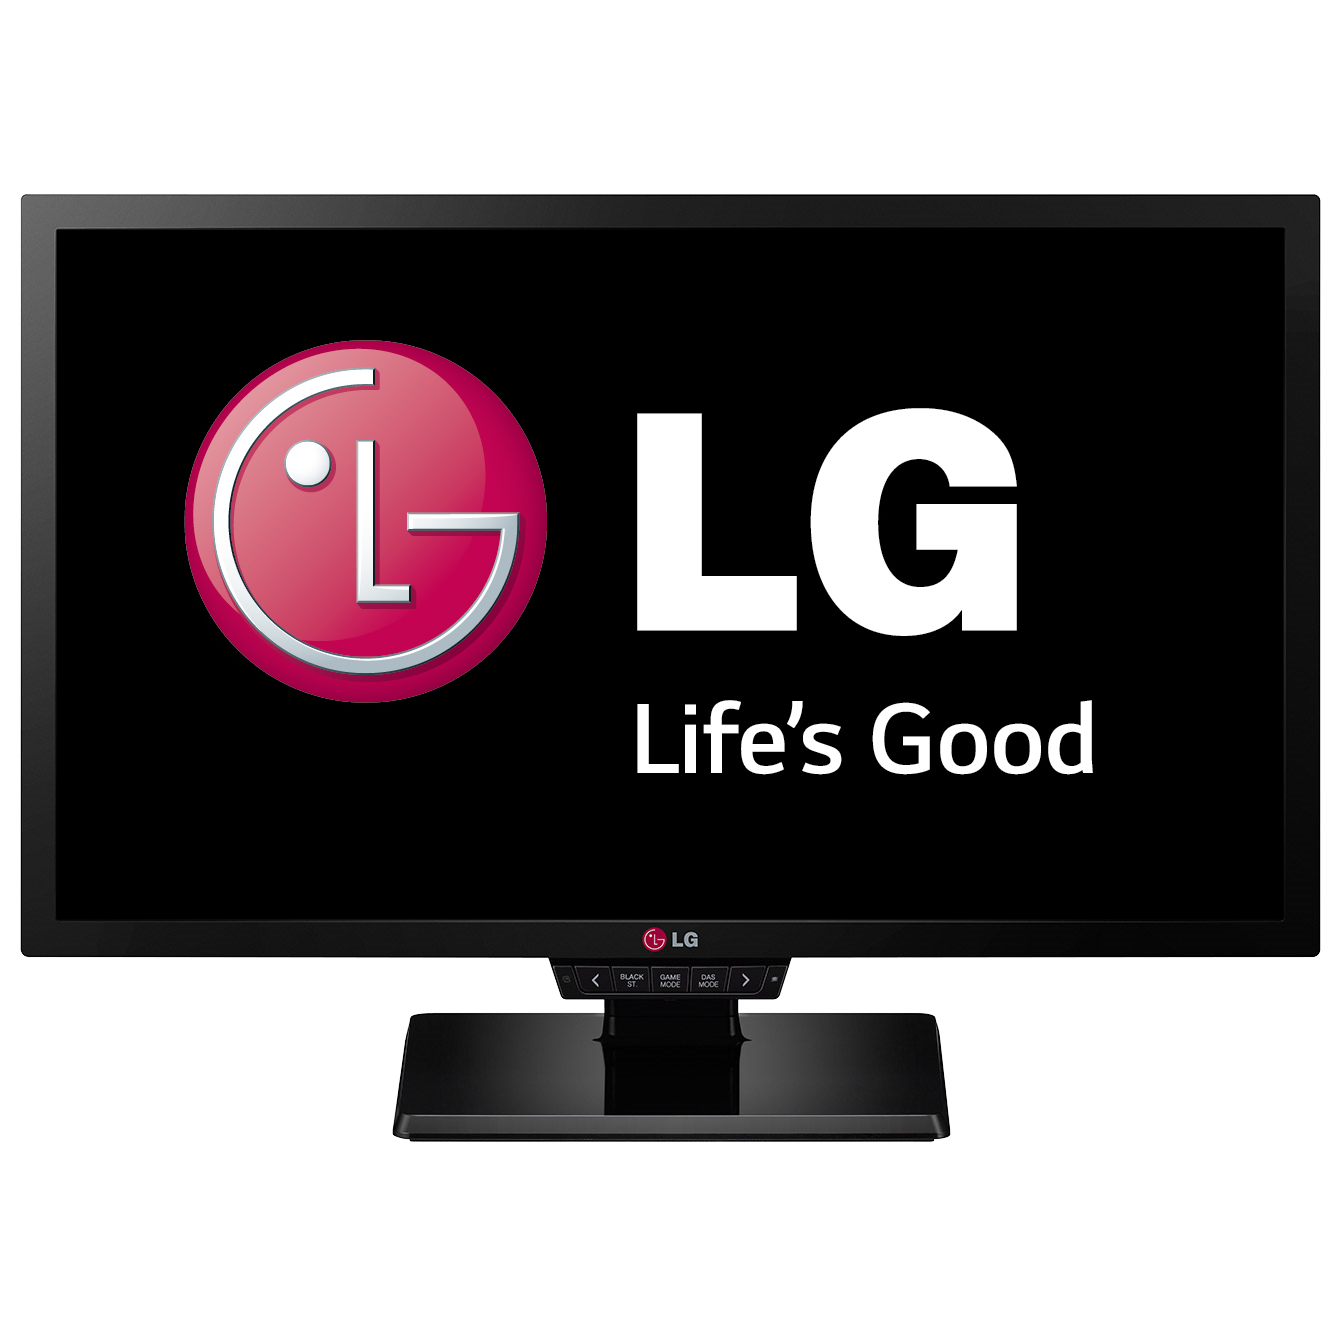 Лг. LG Life s good логотип. LG 24gm77. LG logo 2021. Монитор LG Life's good.